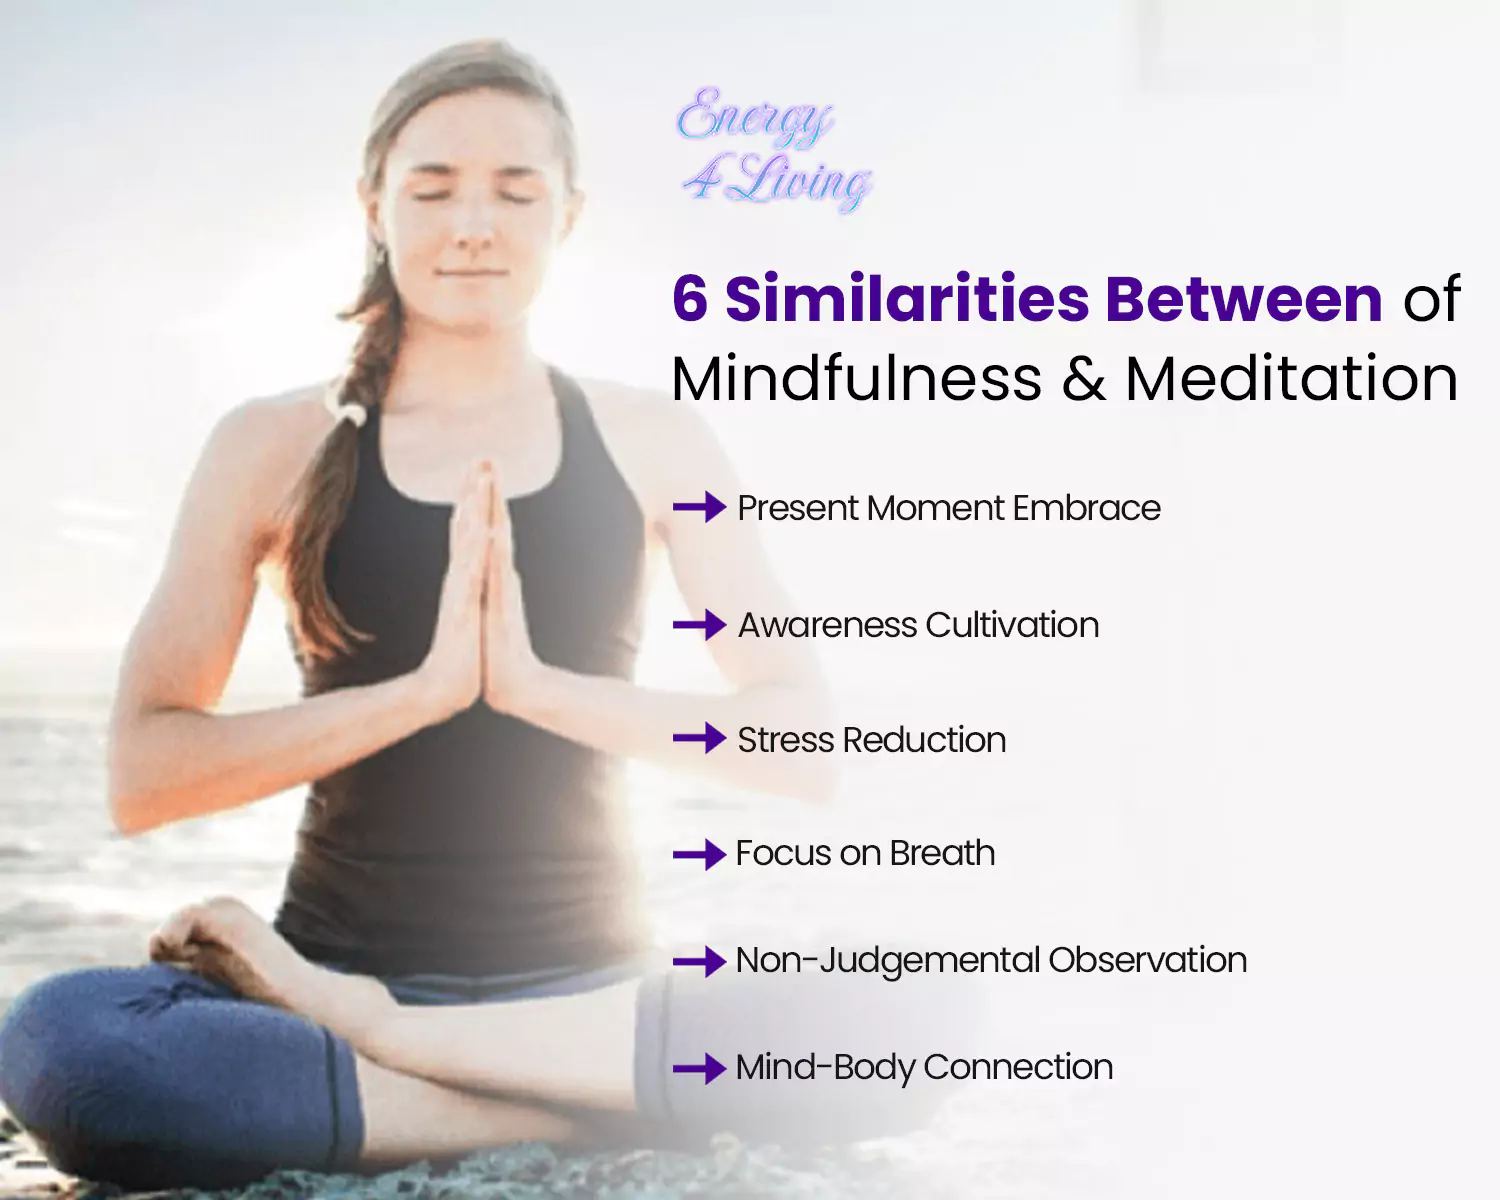 6 Similarities Between Mindfulness and Meditation